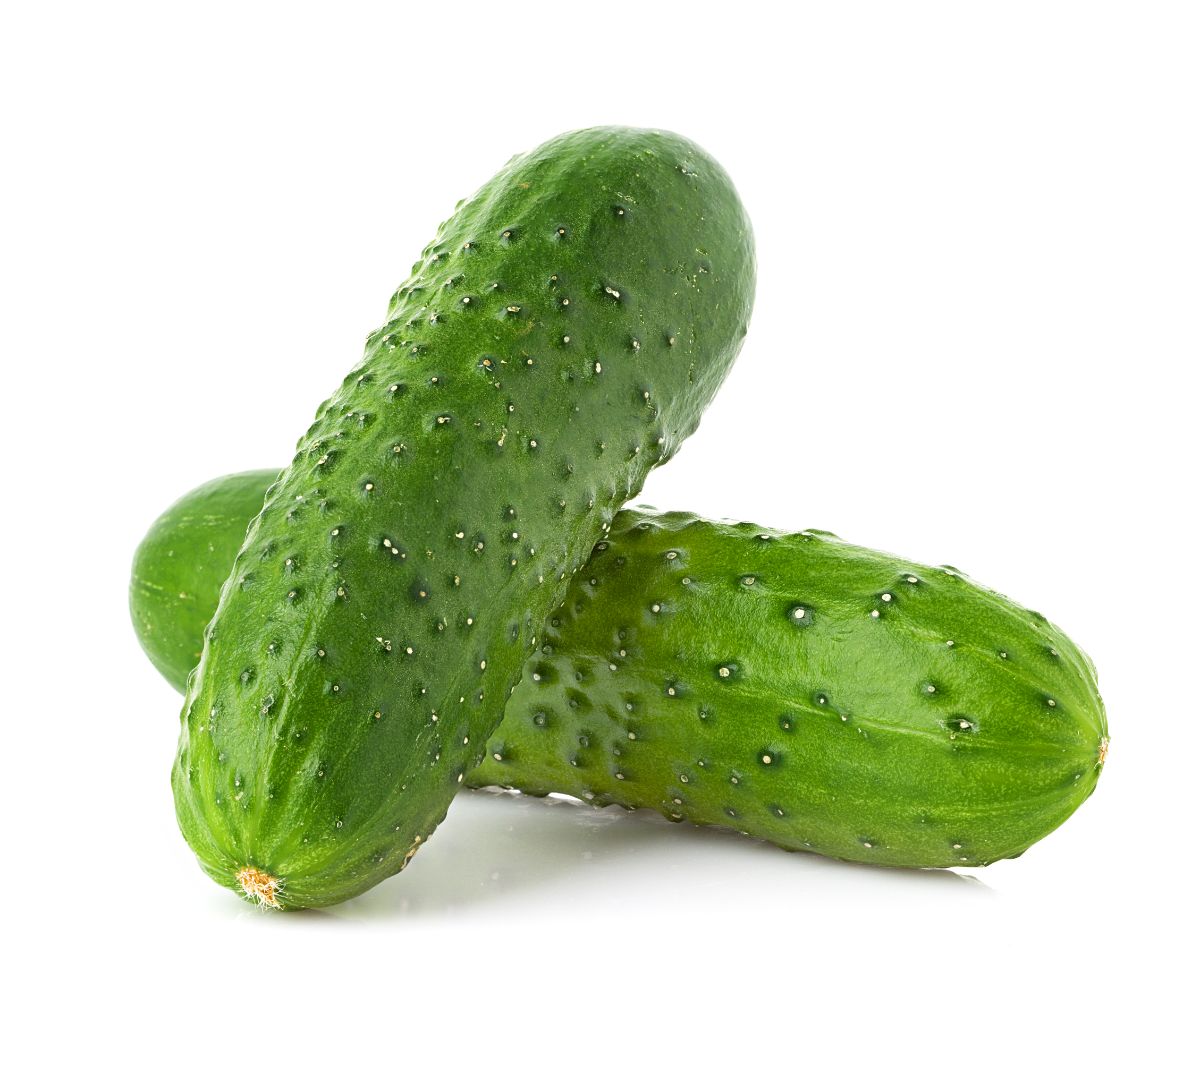 Max Pack cucumber variety